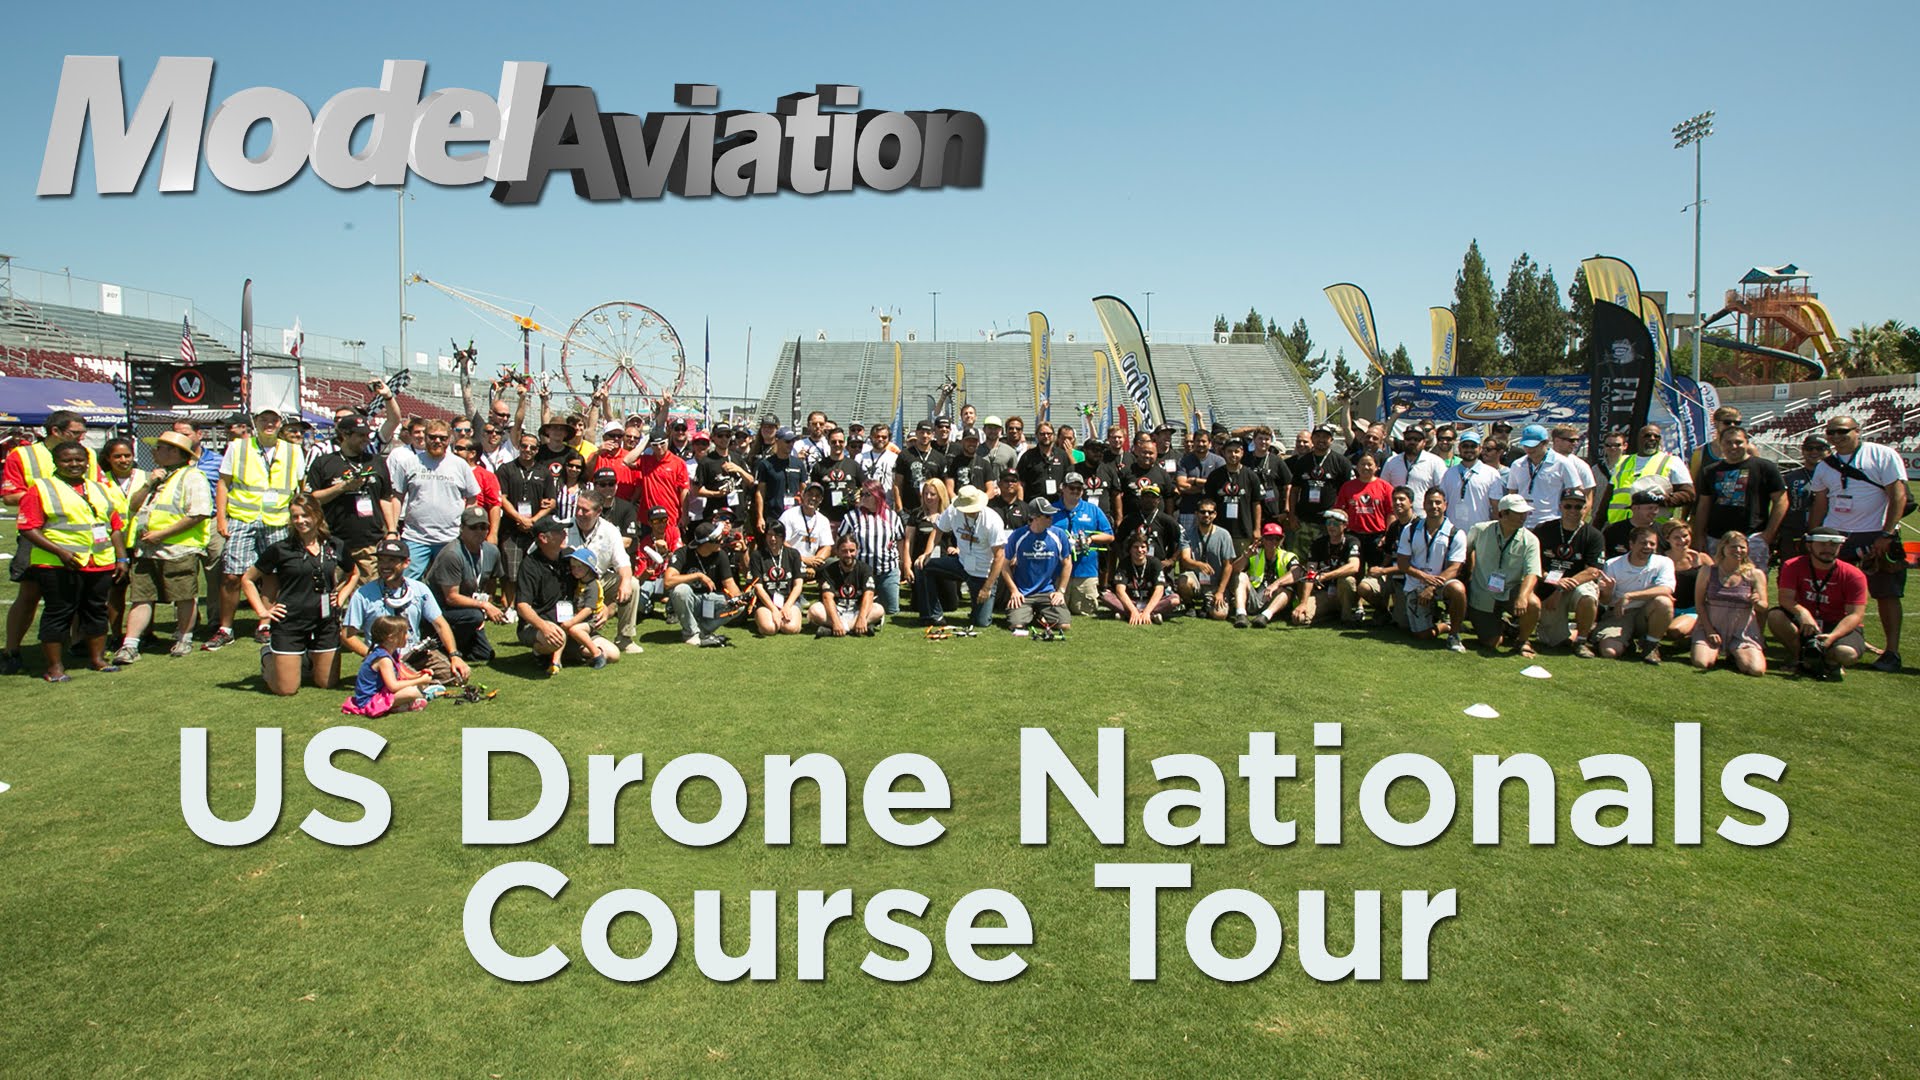 2015 US Drone Nationals Course Tour – Model Aviation